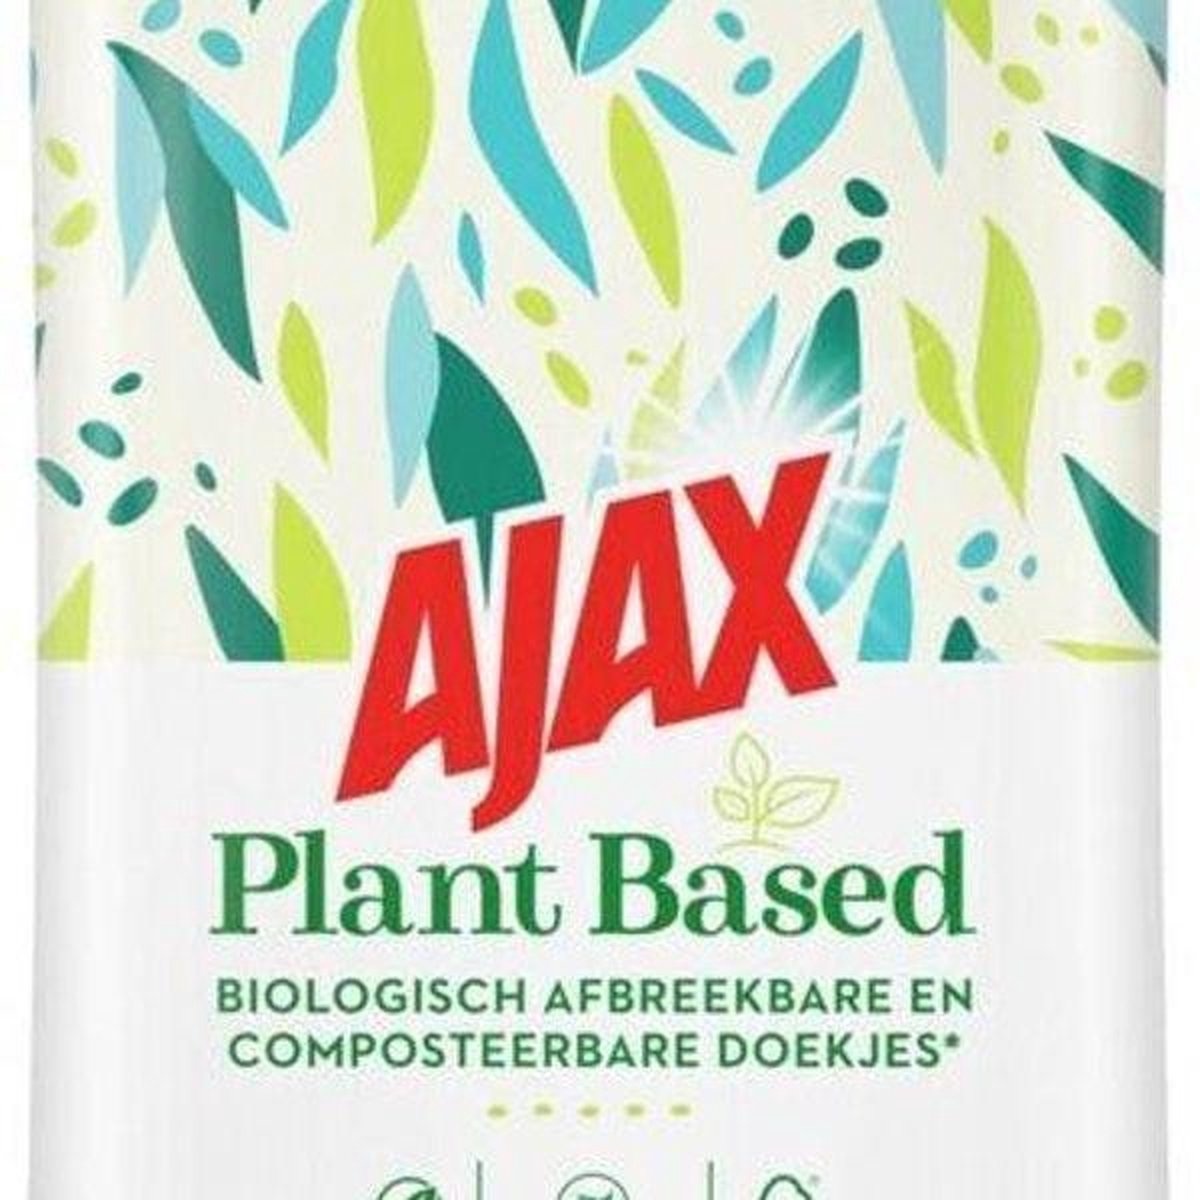 Ajax Gemüse-Reinigungstücher Mehrflächen-Zitronen-/Minzduft - 100 Stück